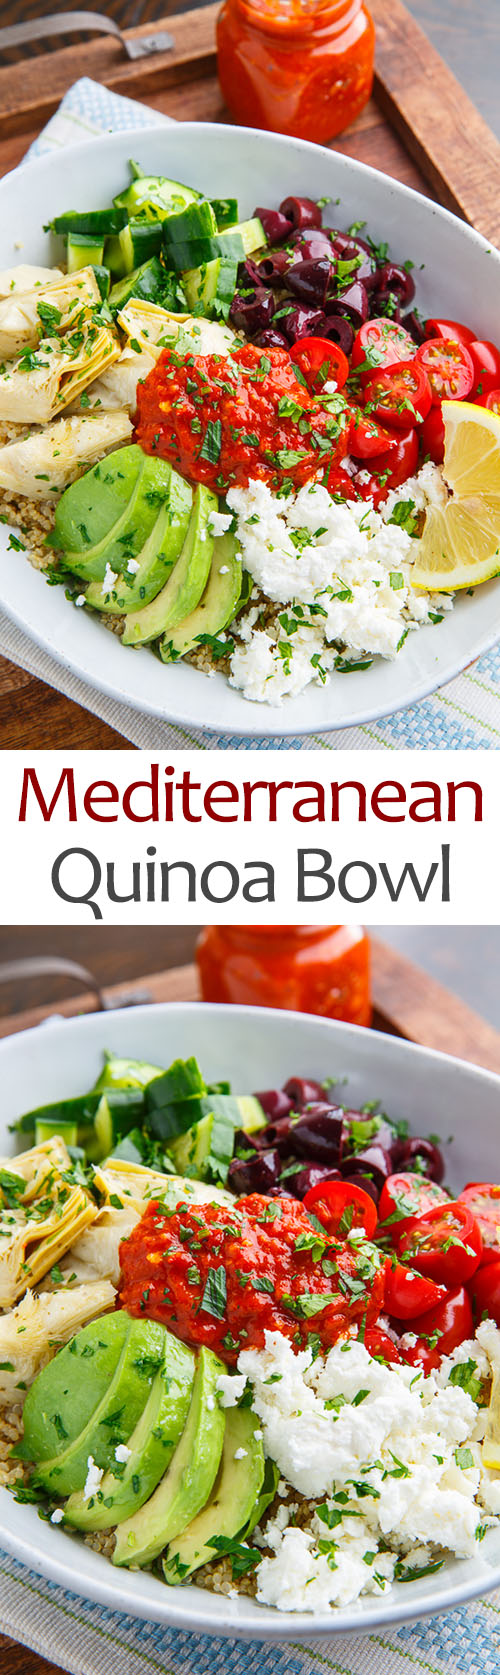 Mediterranean Quinoa Bowls with Romesco Sauce